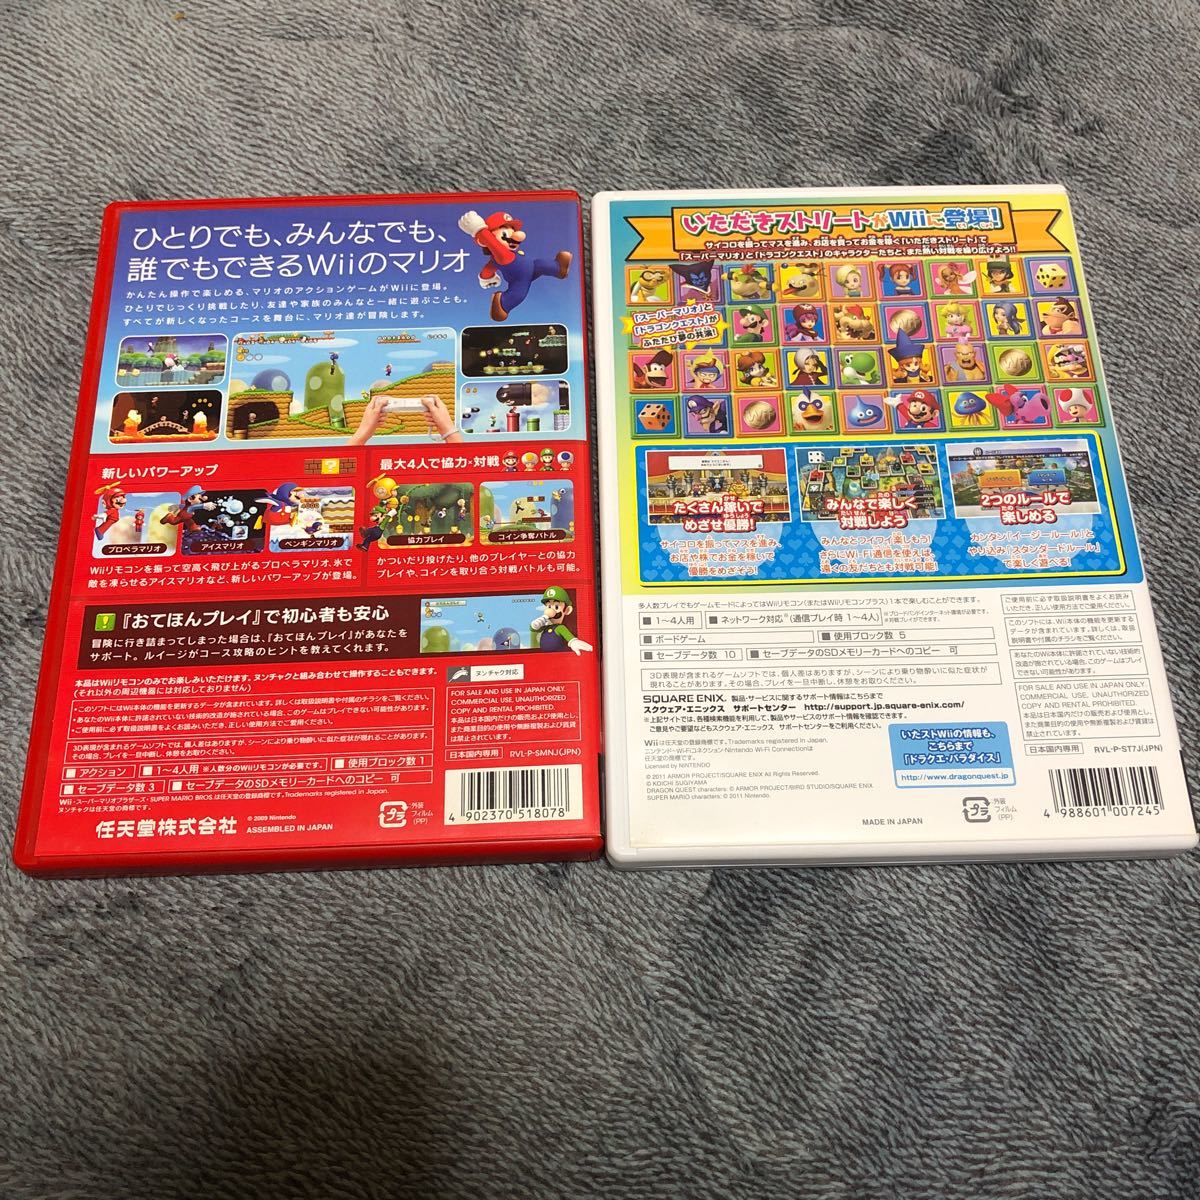 【Wii】 いただきストリートWii ニュースーパーマリオブラザーズWii セット販売